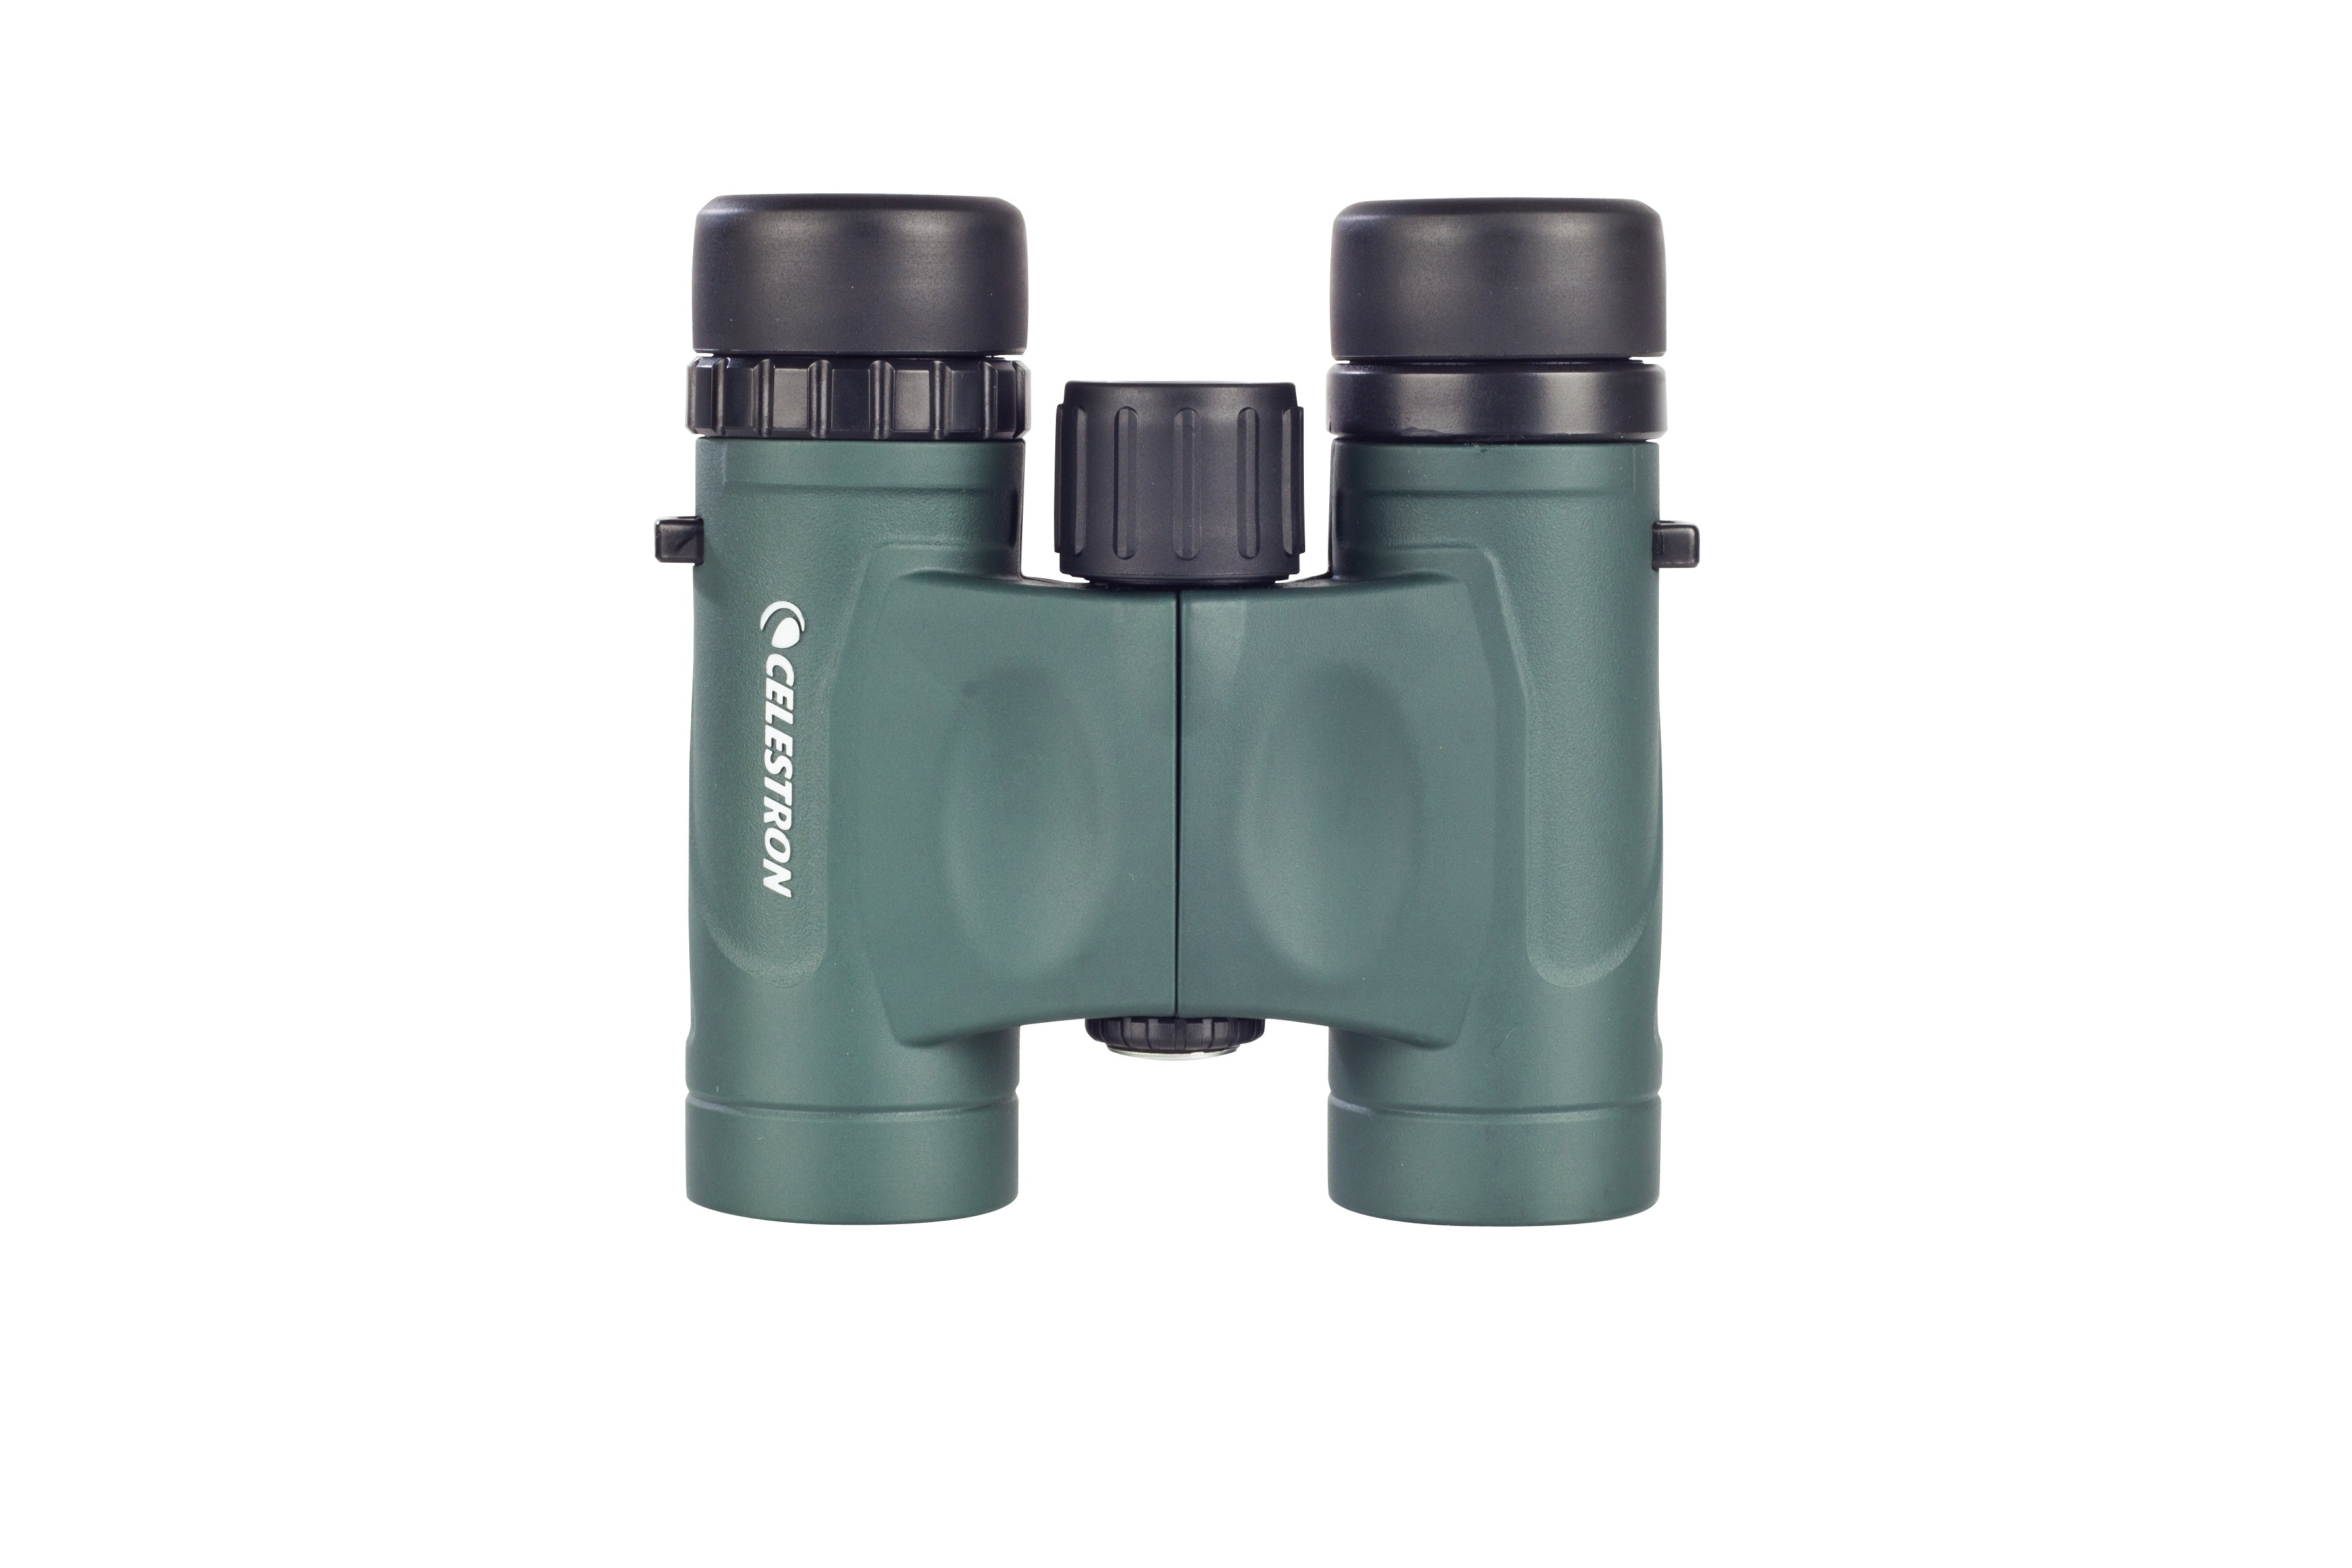 Gylden niece forsikring Reviews & Ratings for Celestron Nature DX 8x25 Binoculars